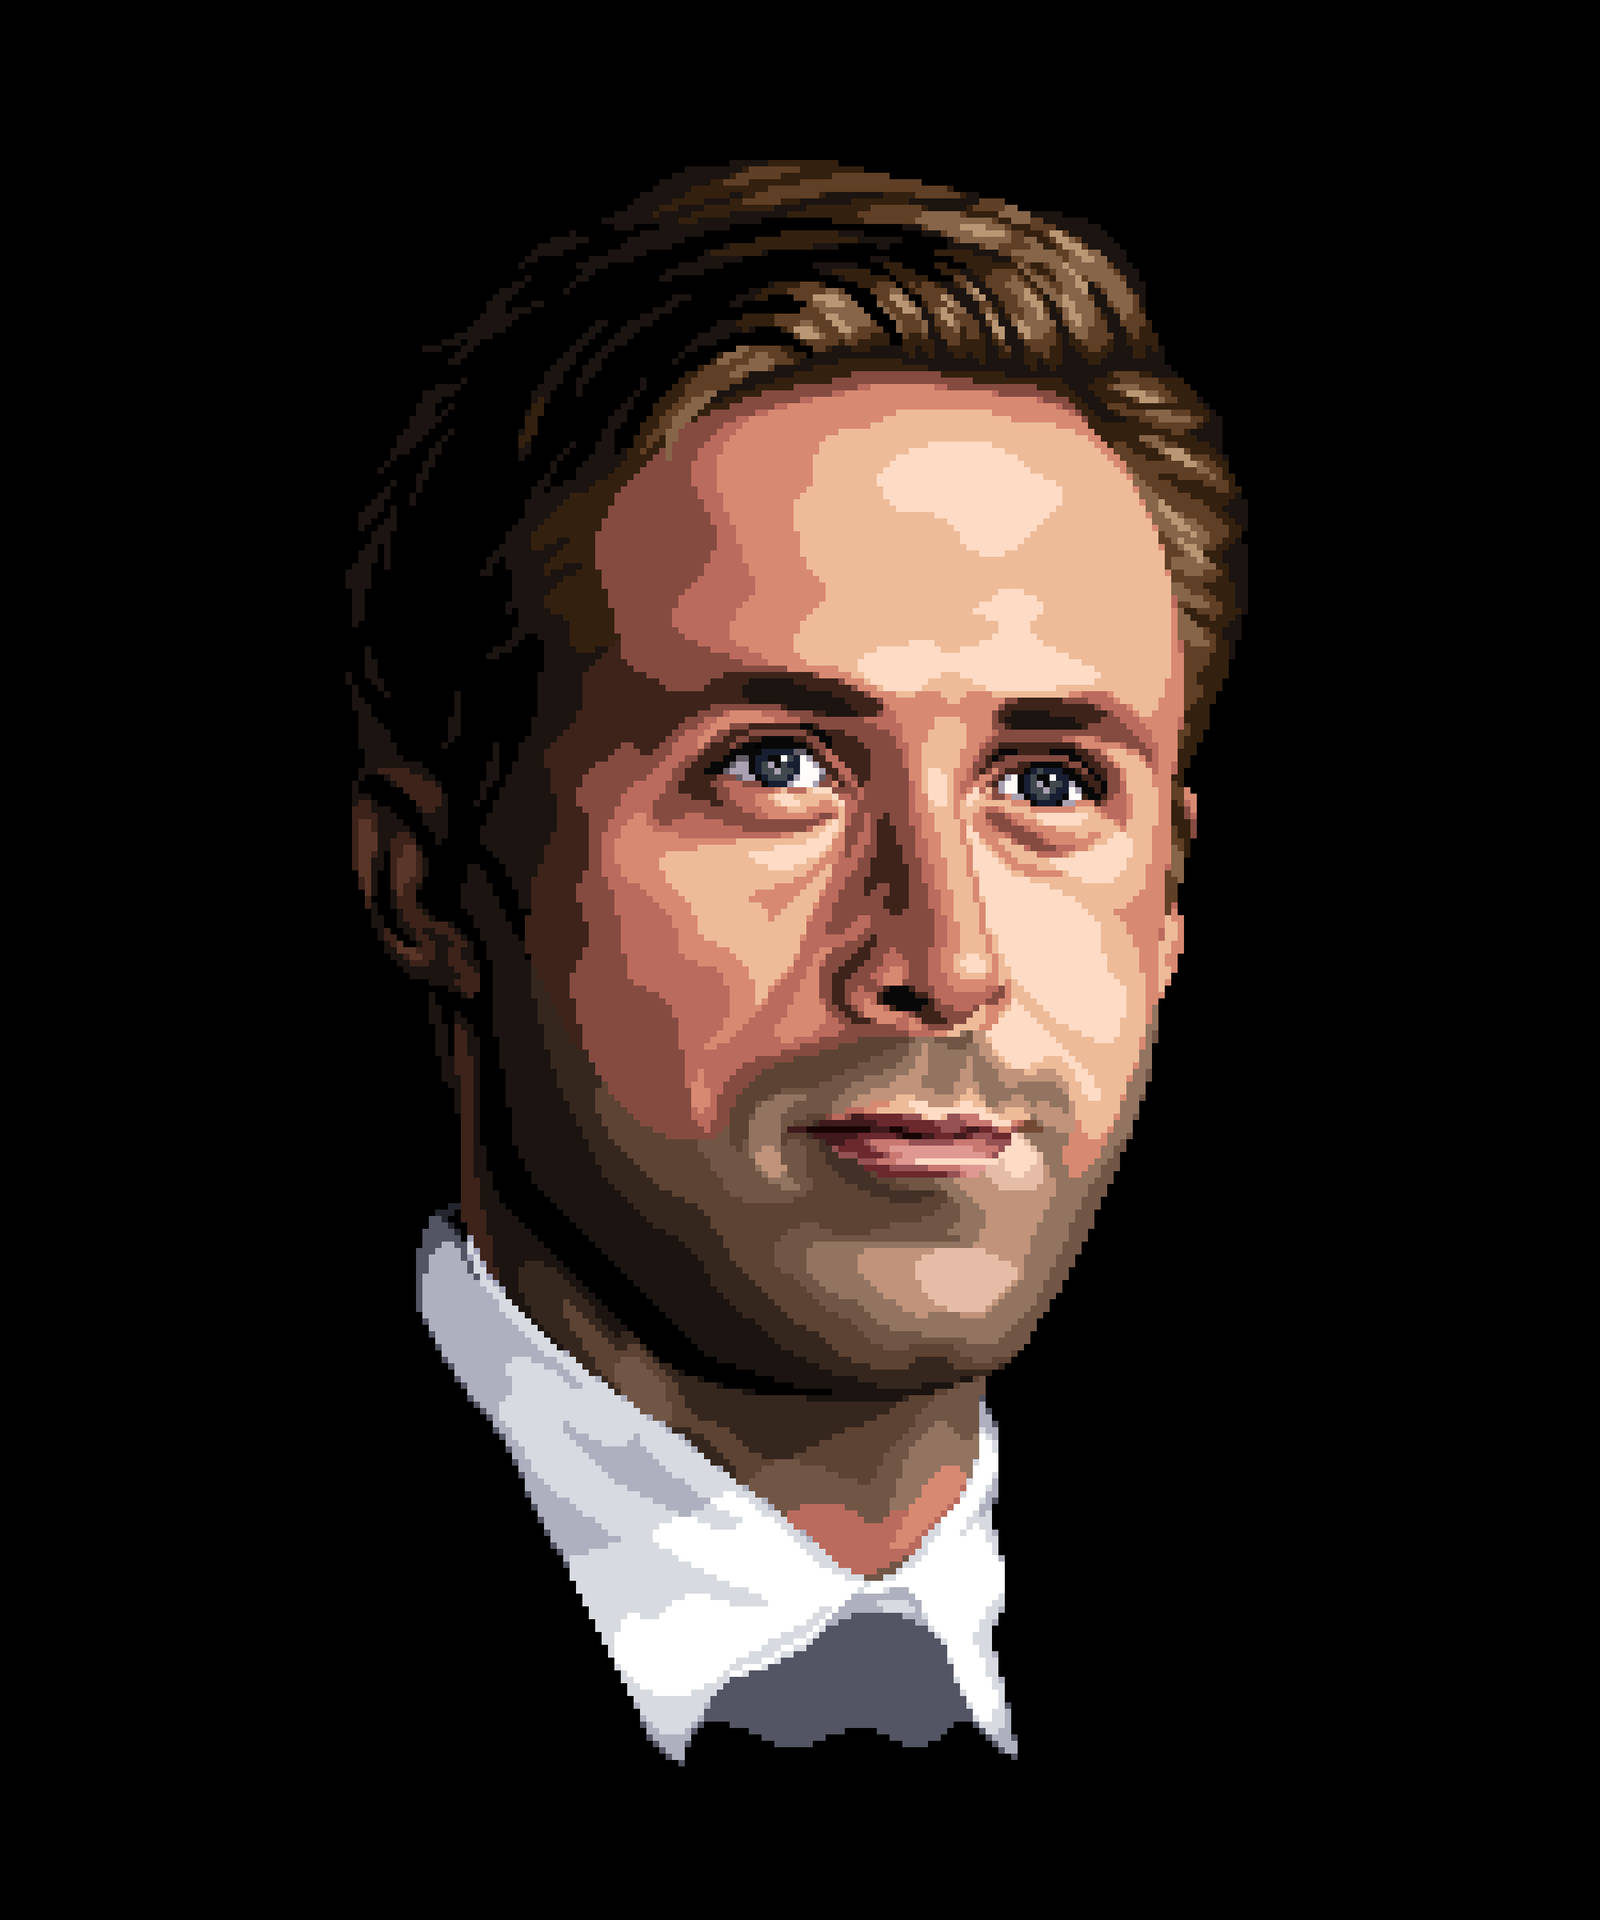 Ryan Gosling Digital Painting